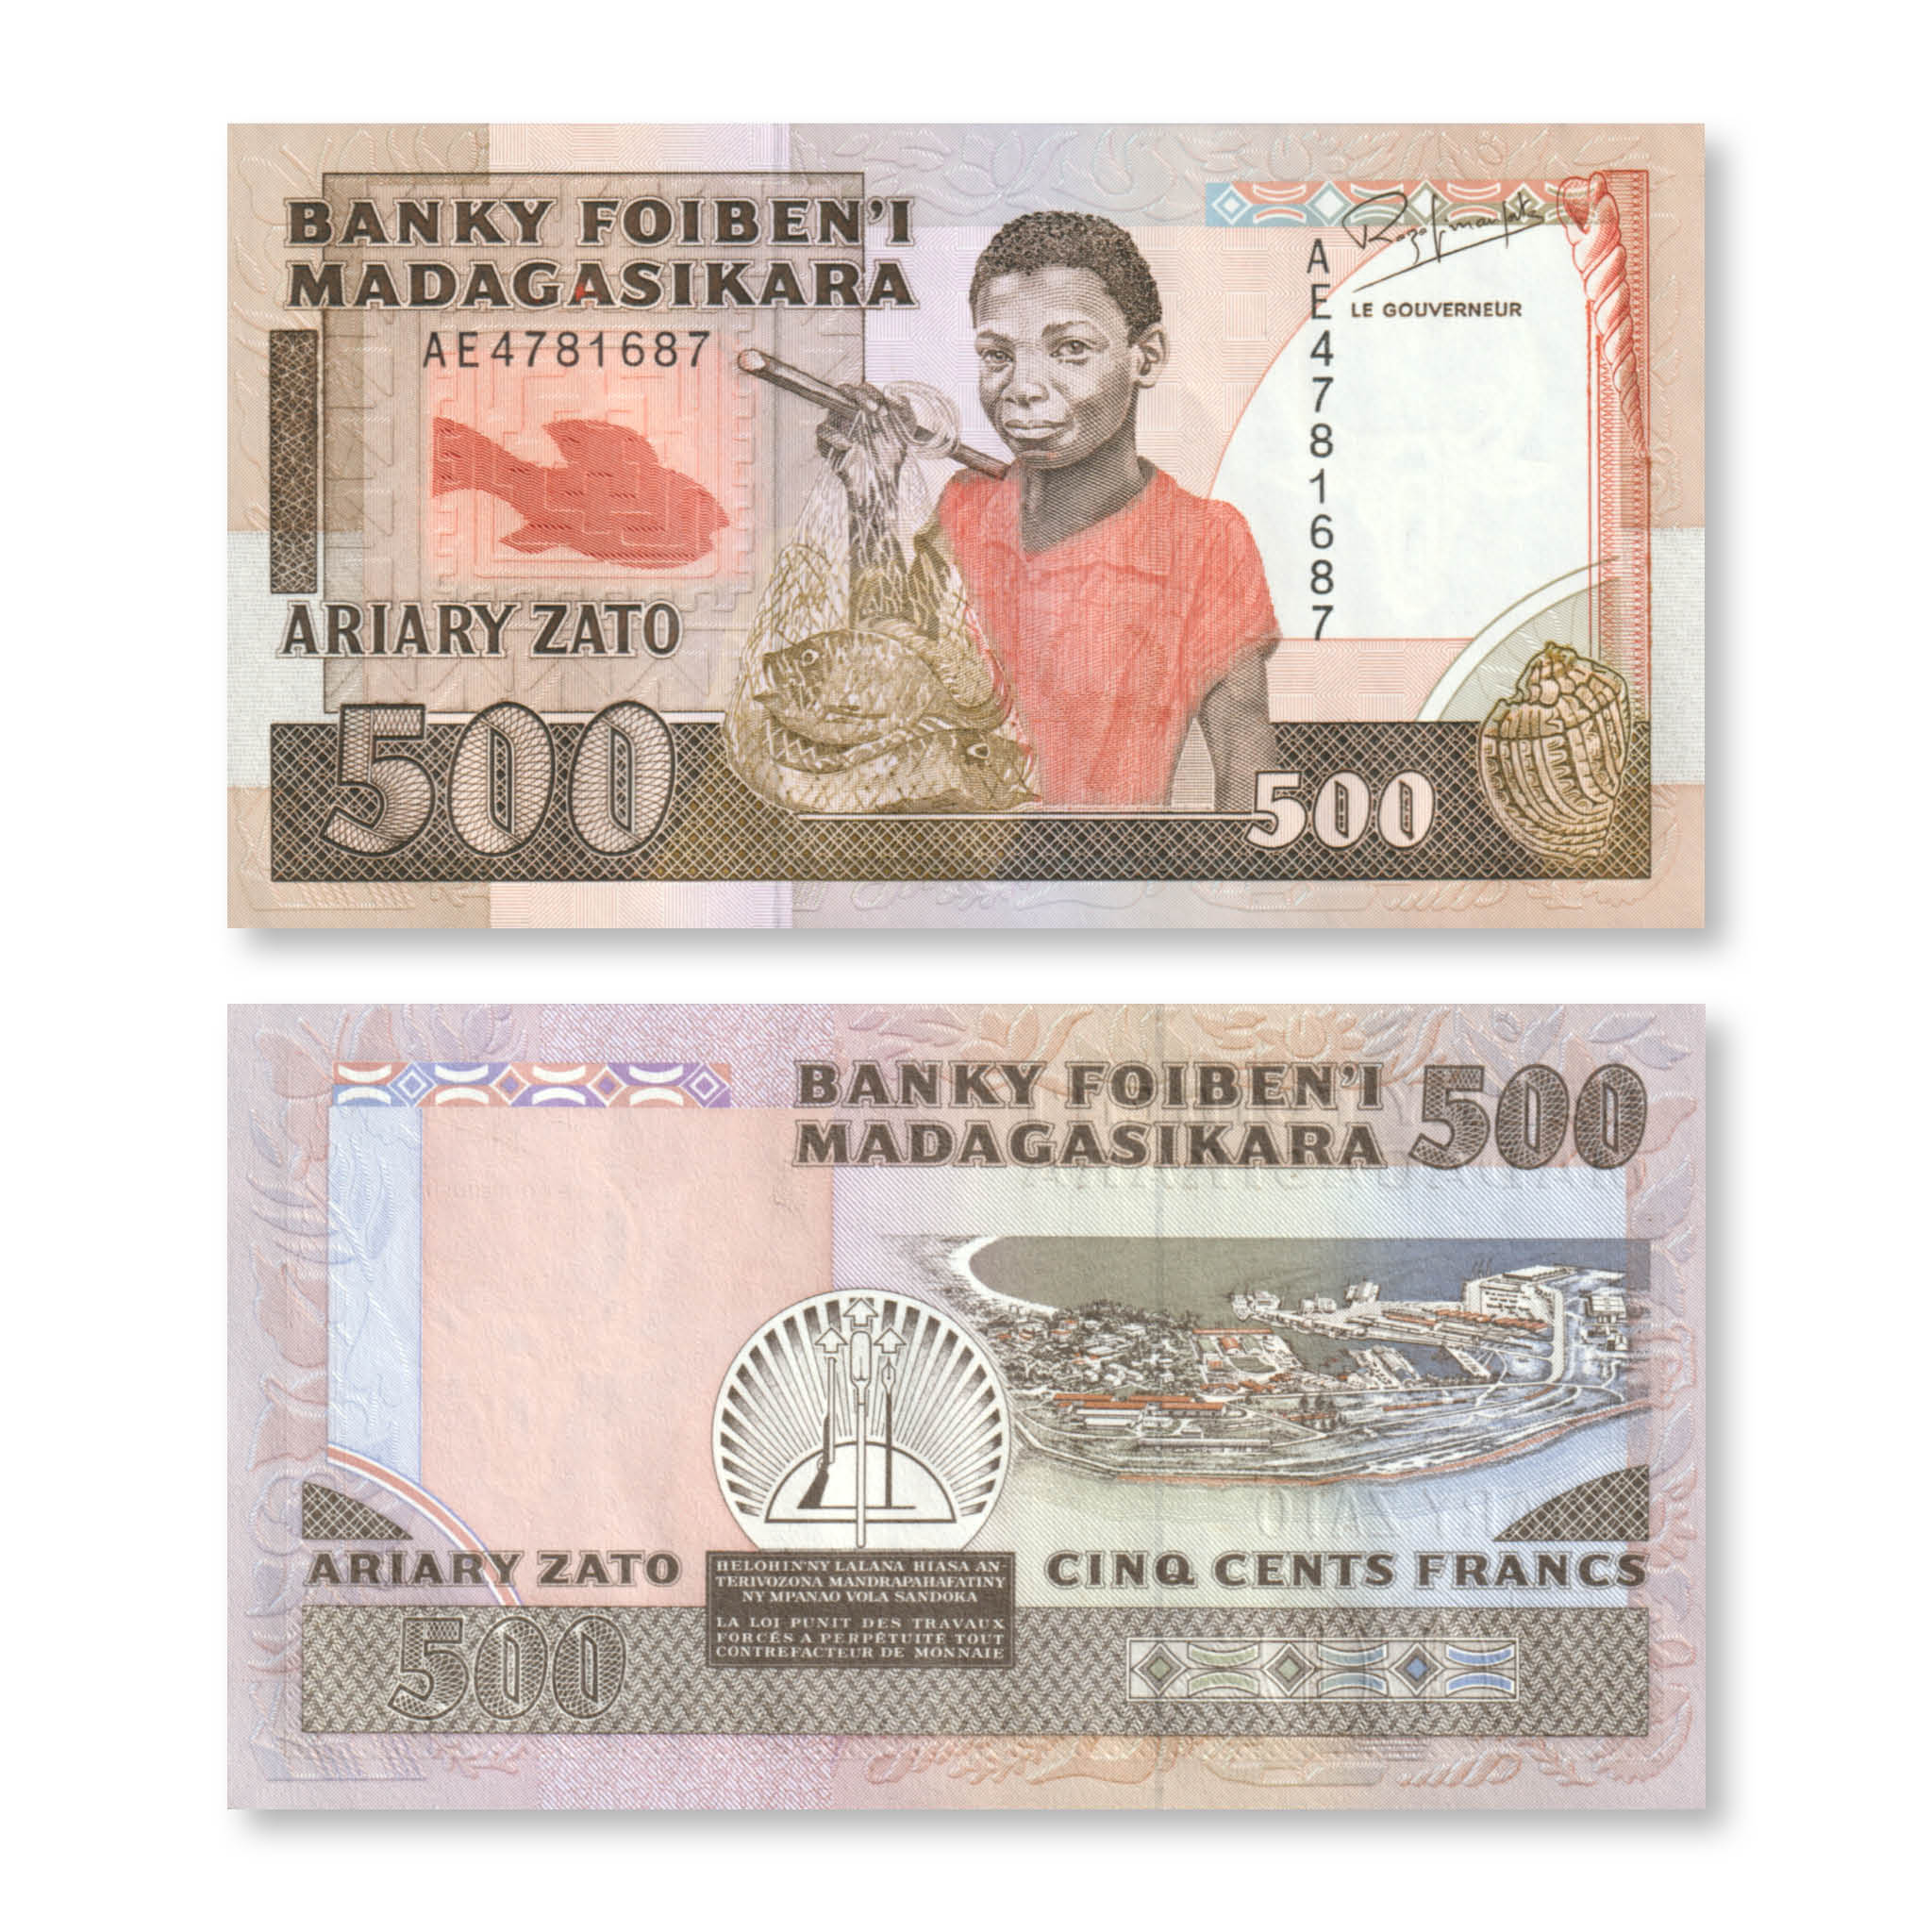 Madagascar 500 Francs, 1988, B305b, P71b, UNC - Robert's World Money - World Banknotes